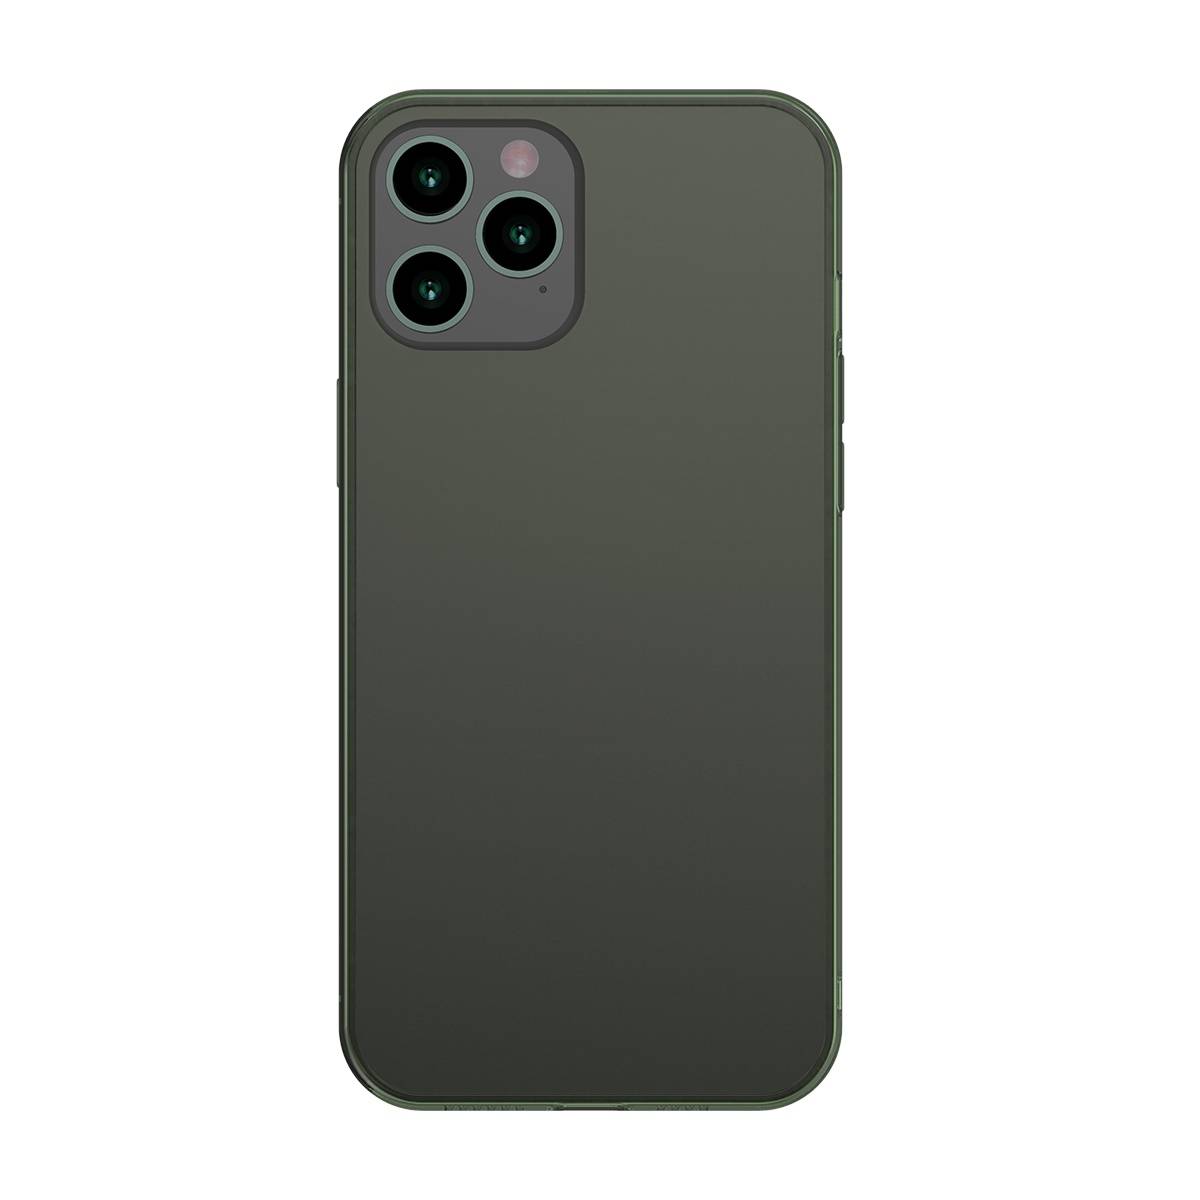 Husa pentru Apple iPhone 12 Pro Max, Baseus Protective Case, Verde, 6.7 inch 6.7 imagine Black Friday 2021